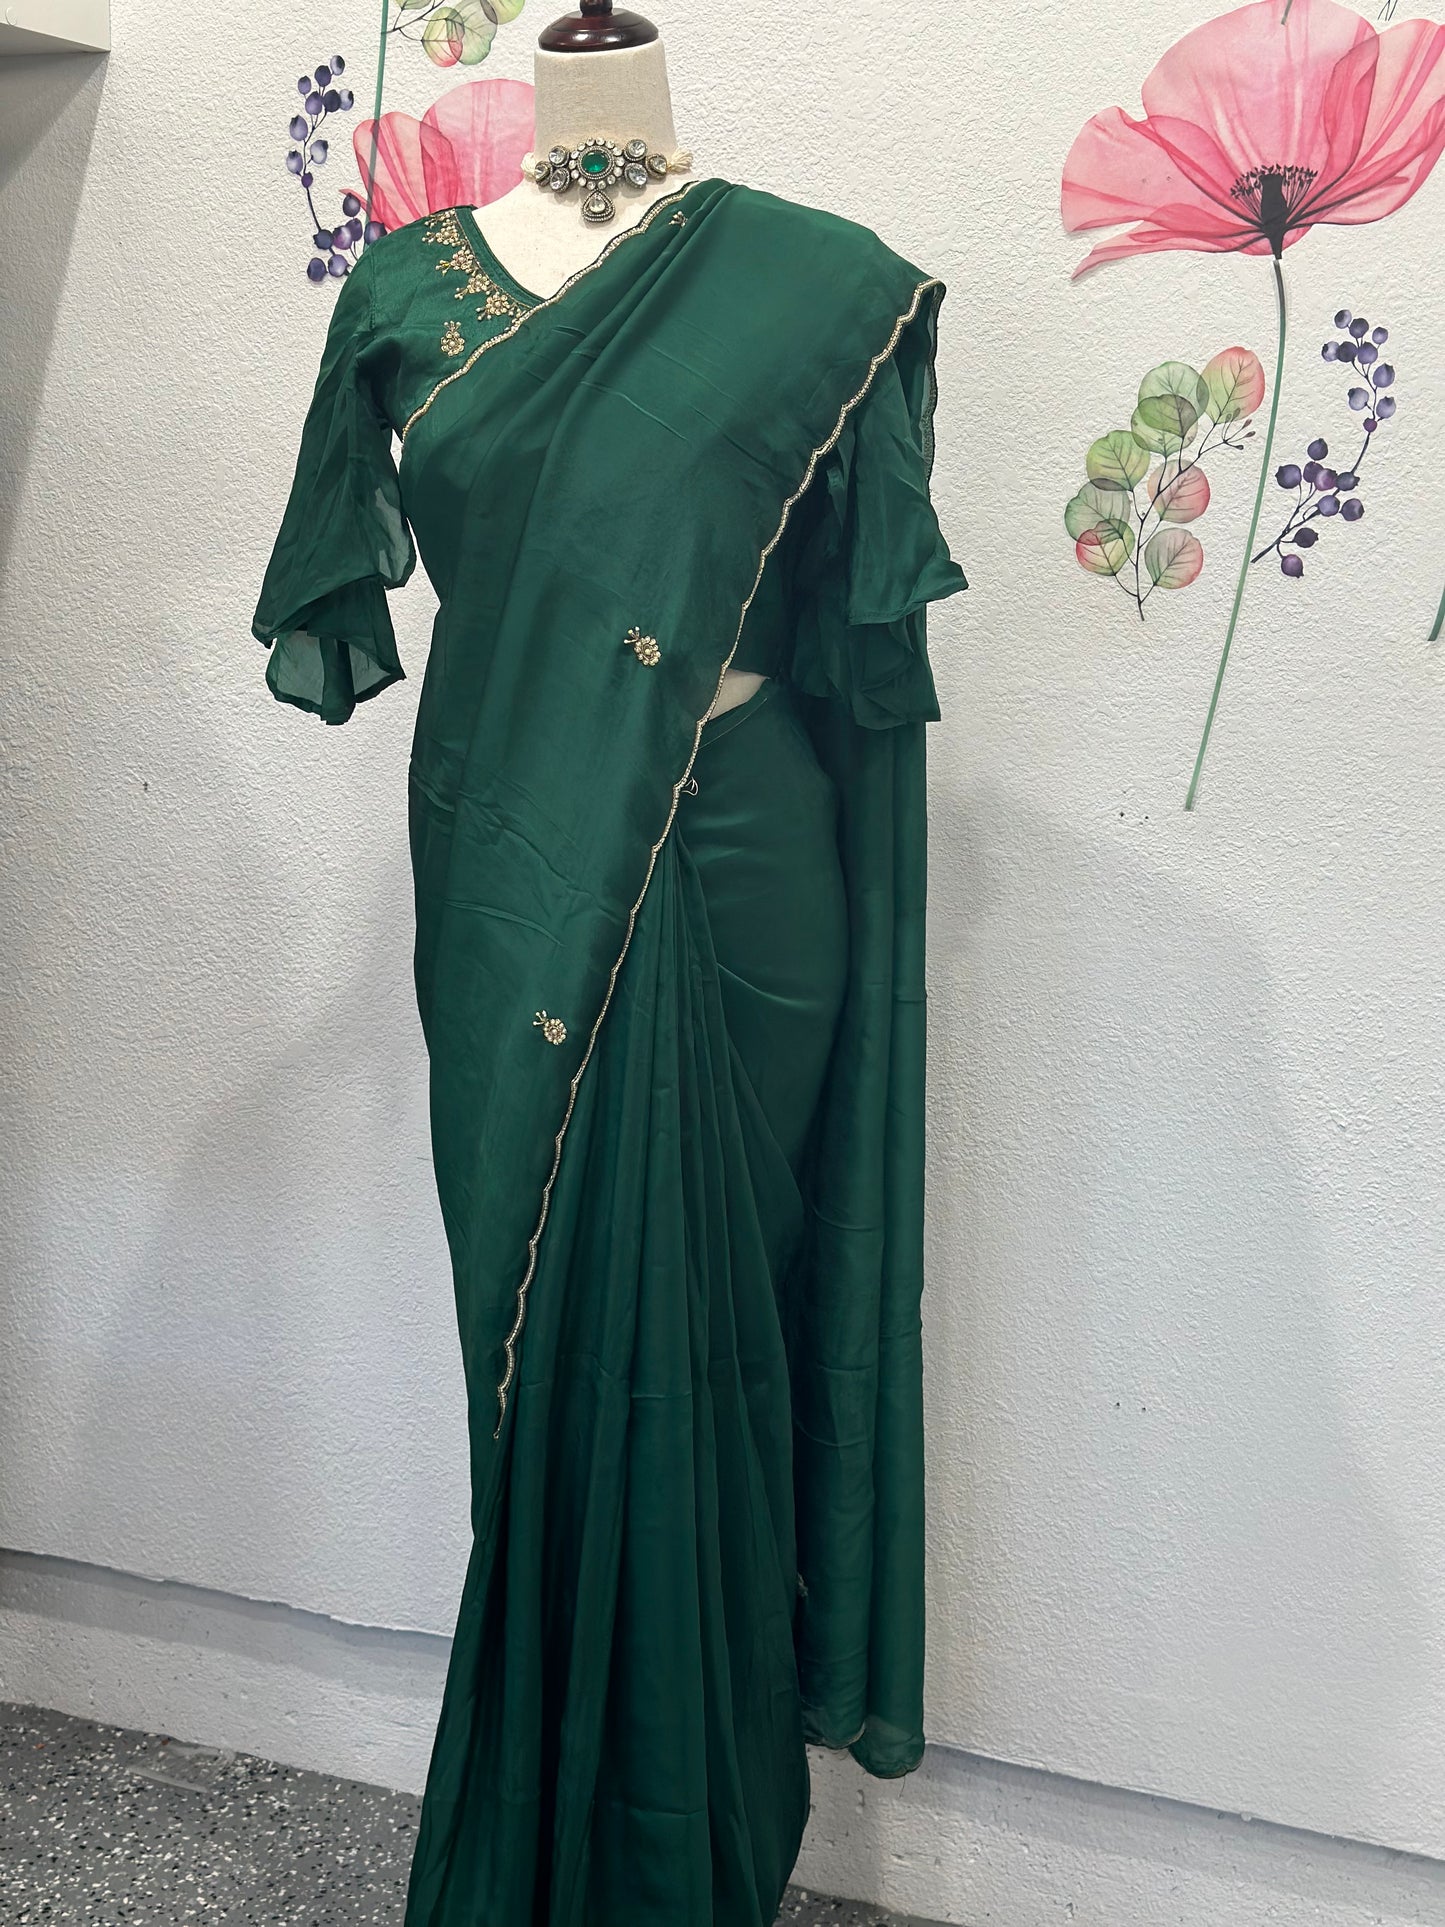 Satin embroidery fancy saree | Party wear saree | Sarees in USA